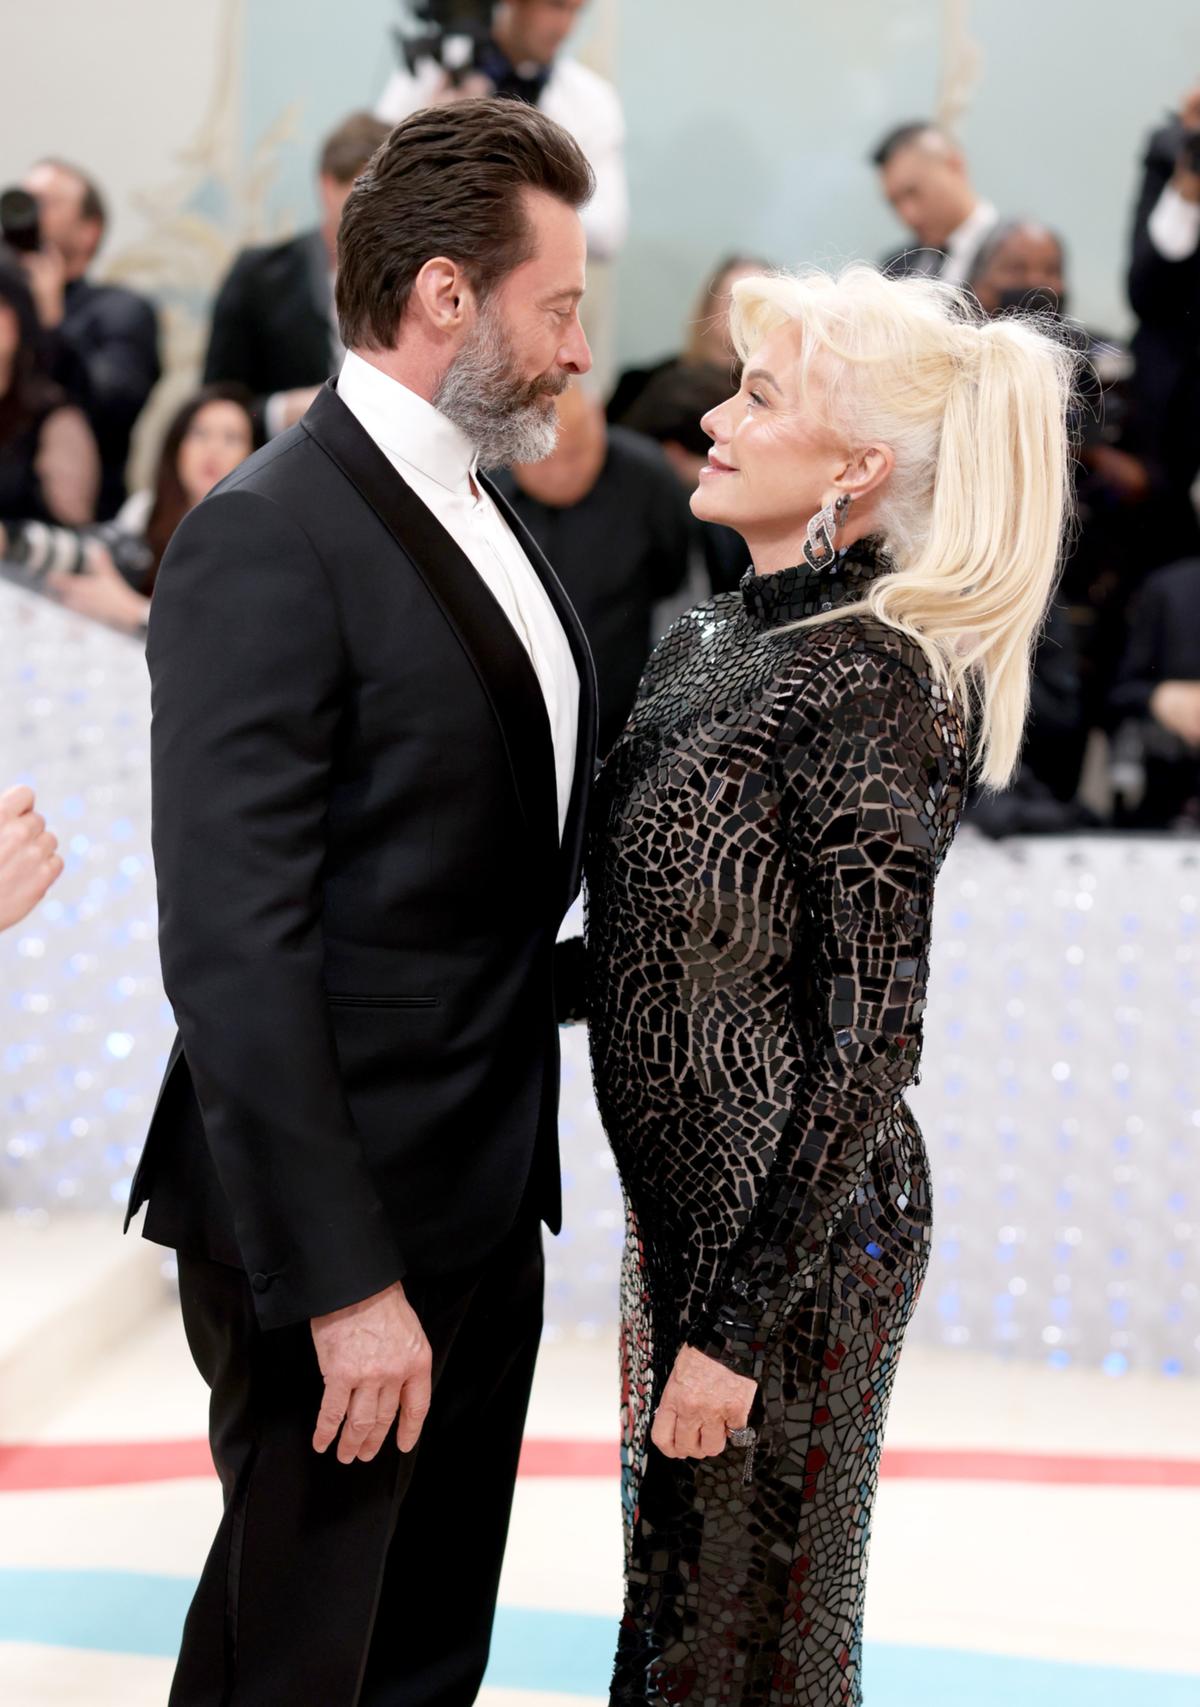 Hugh Jackman and Deborra-Lee Furness marriage split: Body language expert makes major call as footage resurfaces